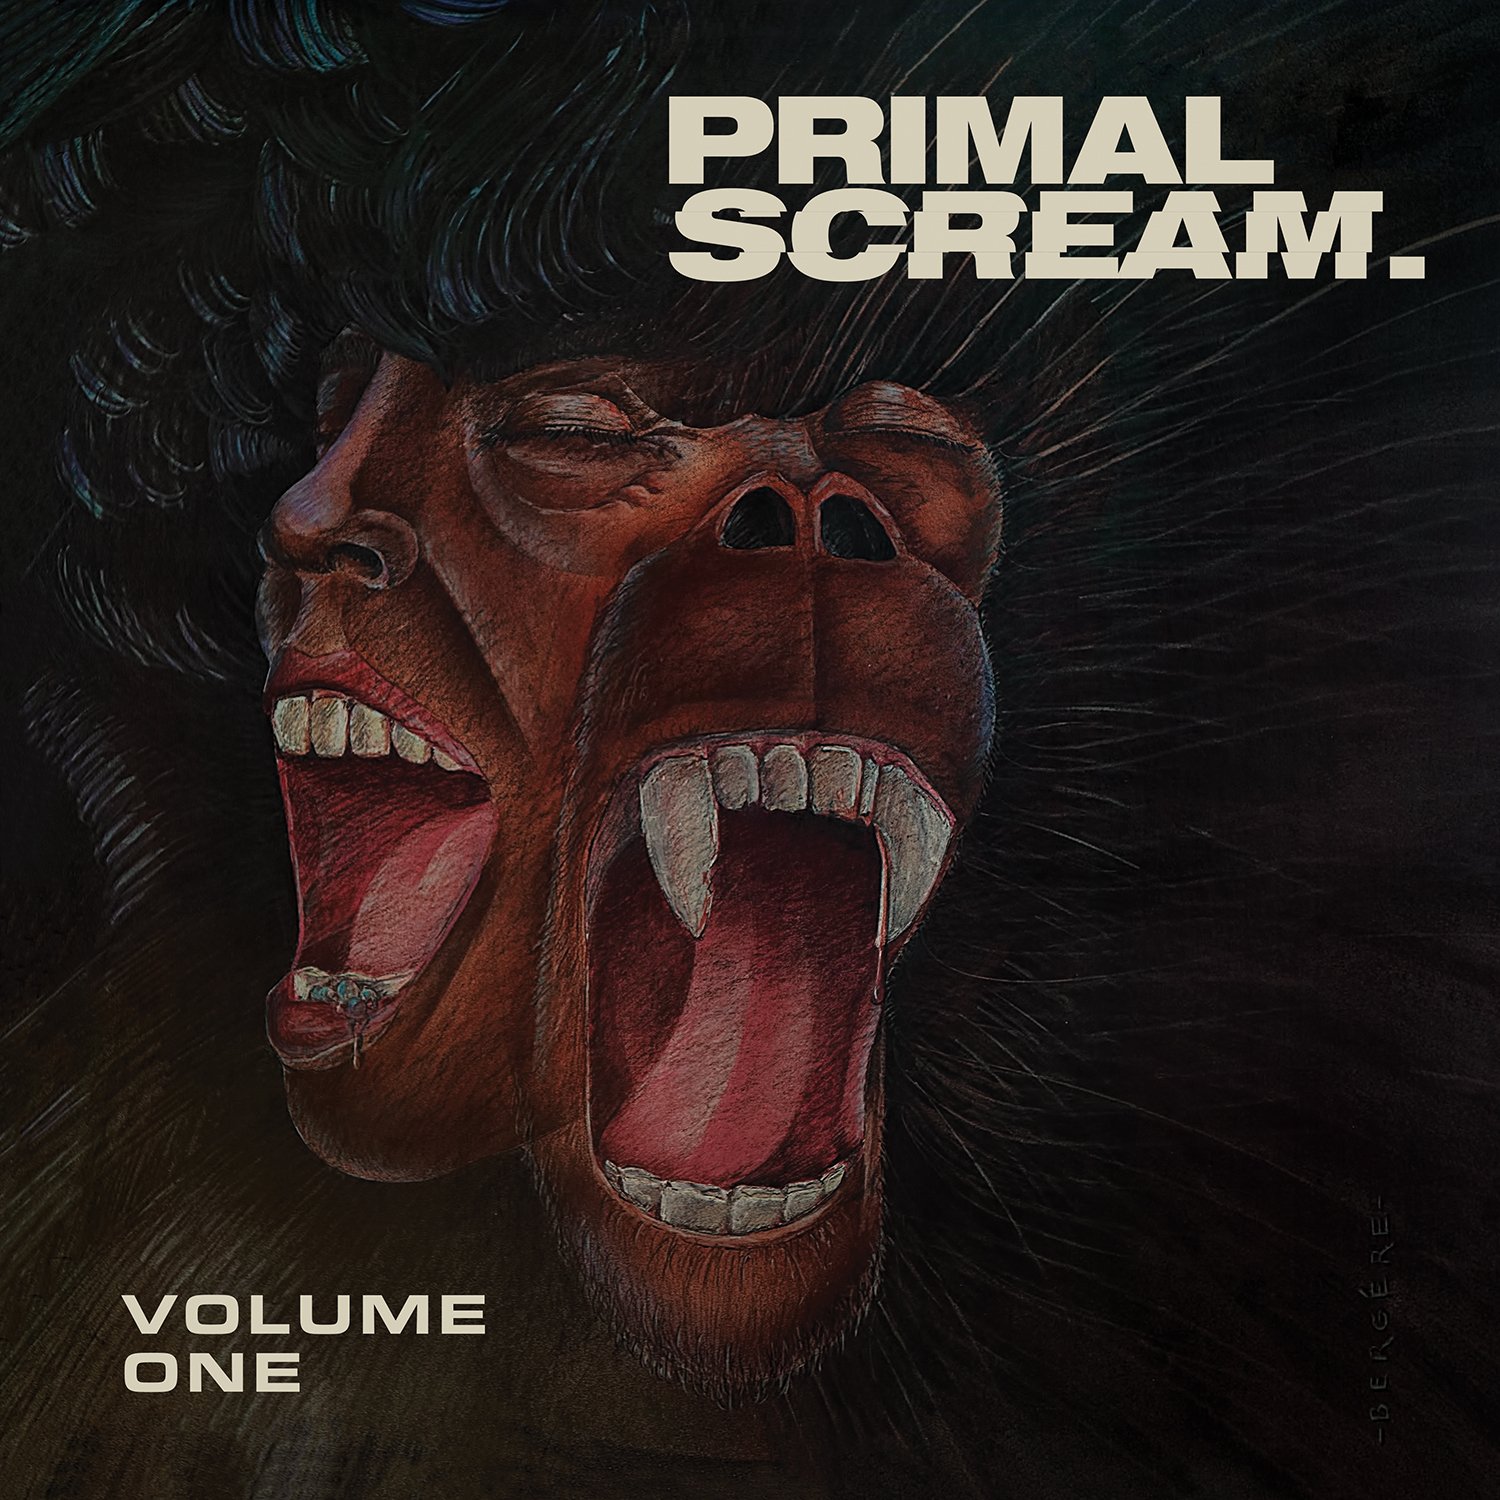 PRIMAL SCREAM NYC - Volume One (Deluxe Edition)